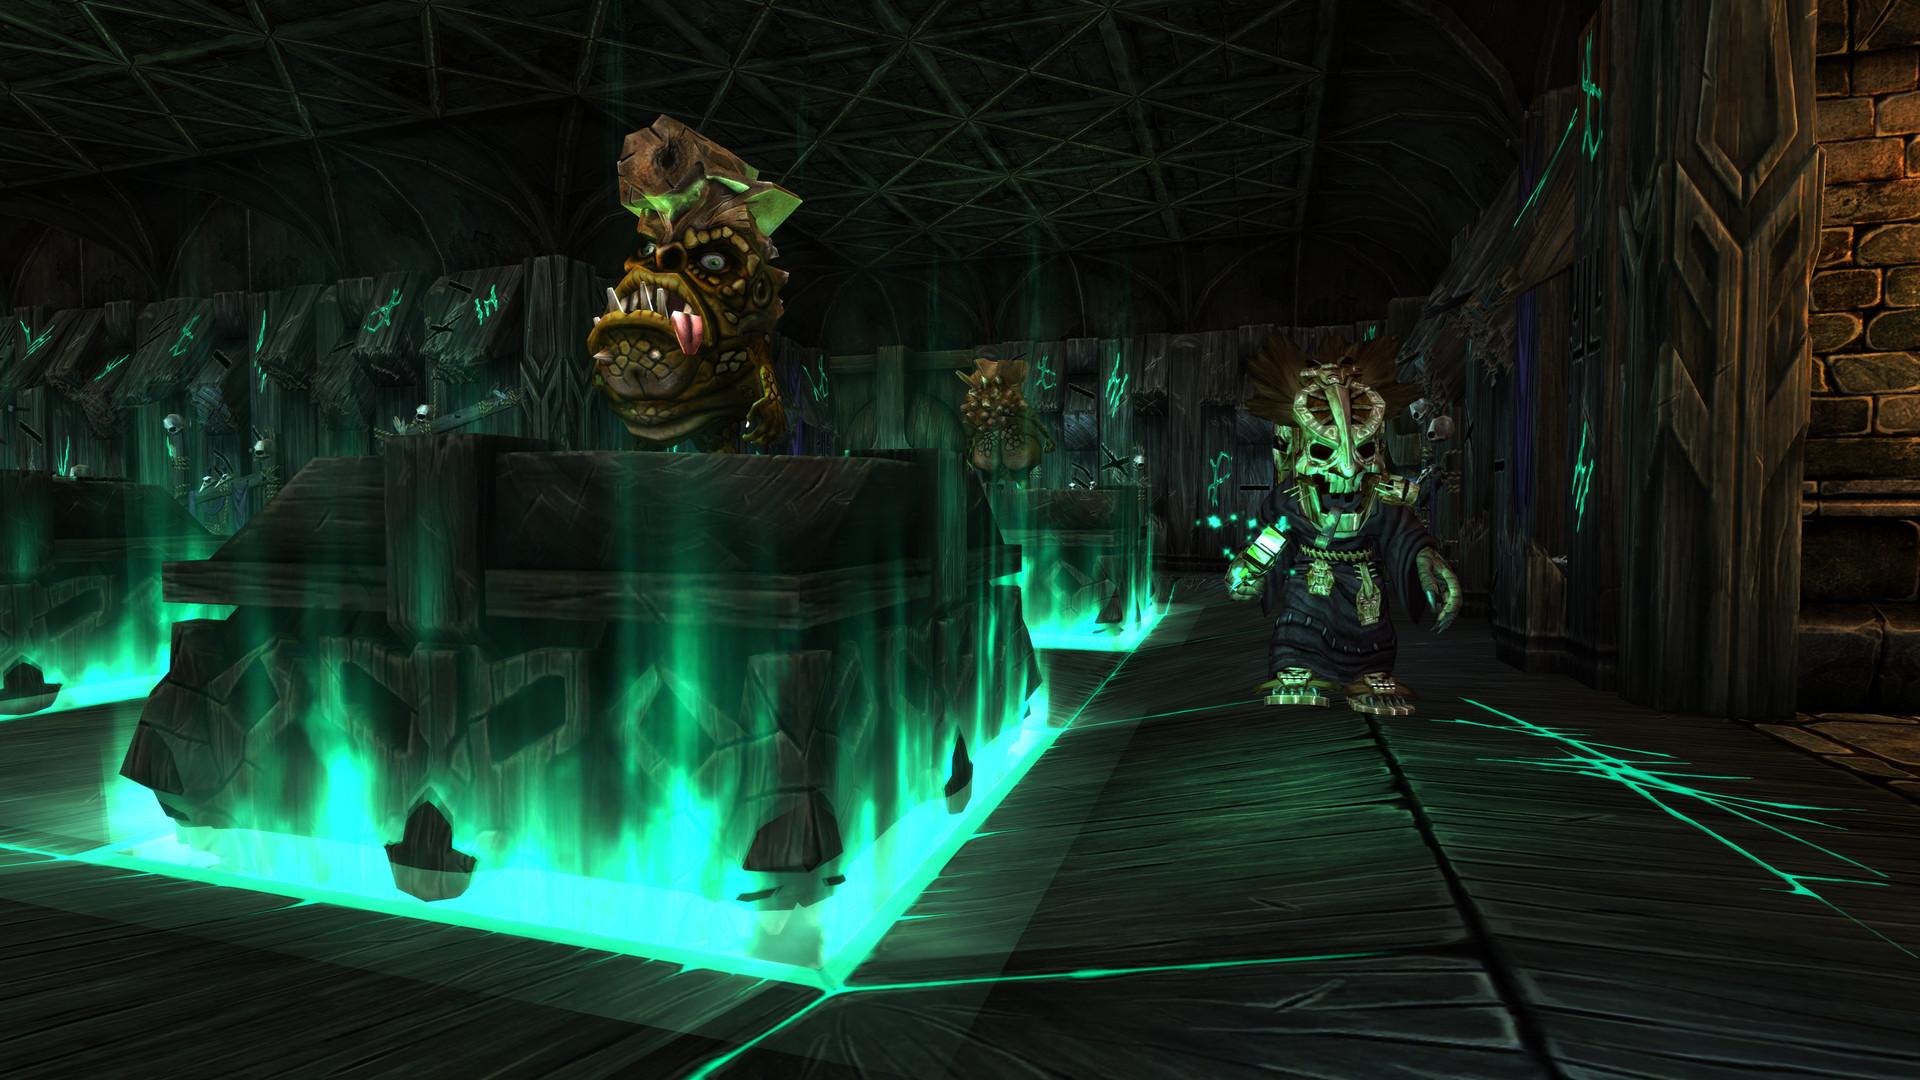 Screenshot №3 from game War for the Overworld